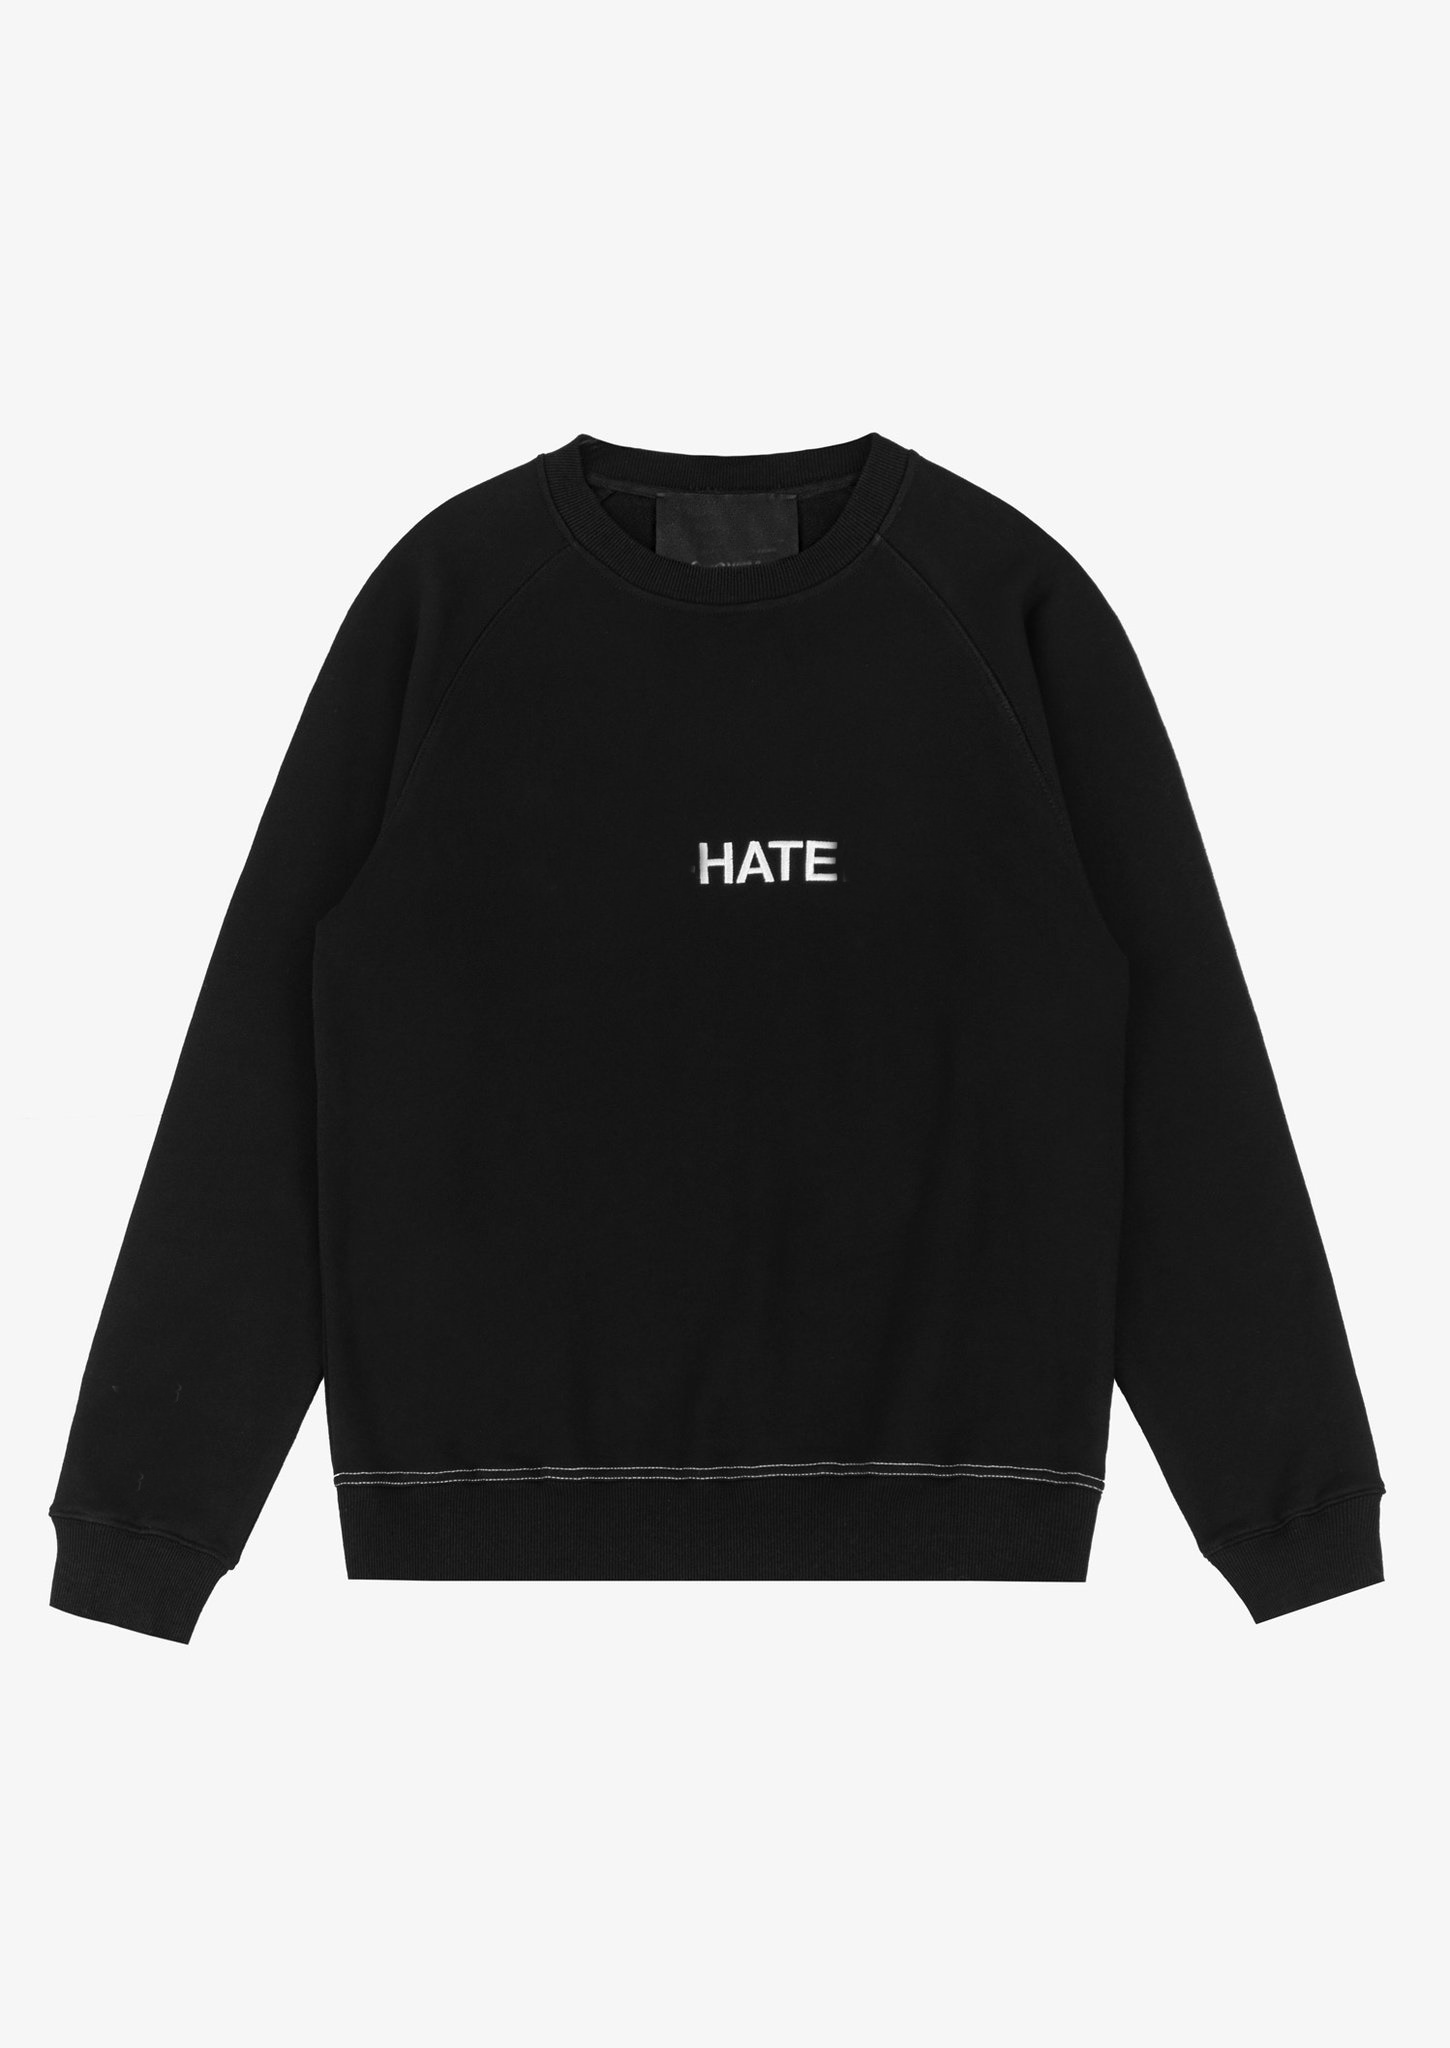 Custom Made Unisex Raglan Black Cotton Embroidery Sweatshirts Featured Image